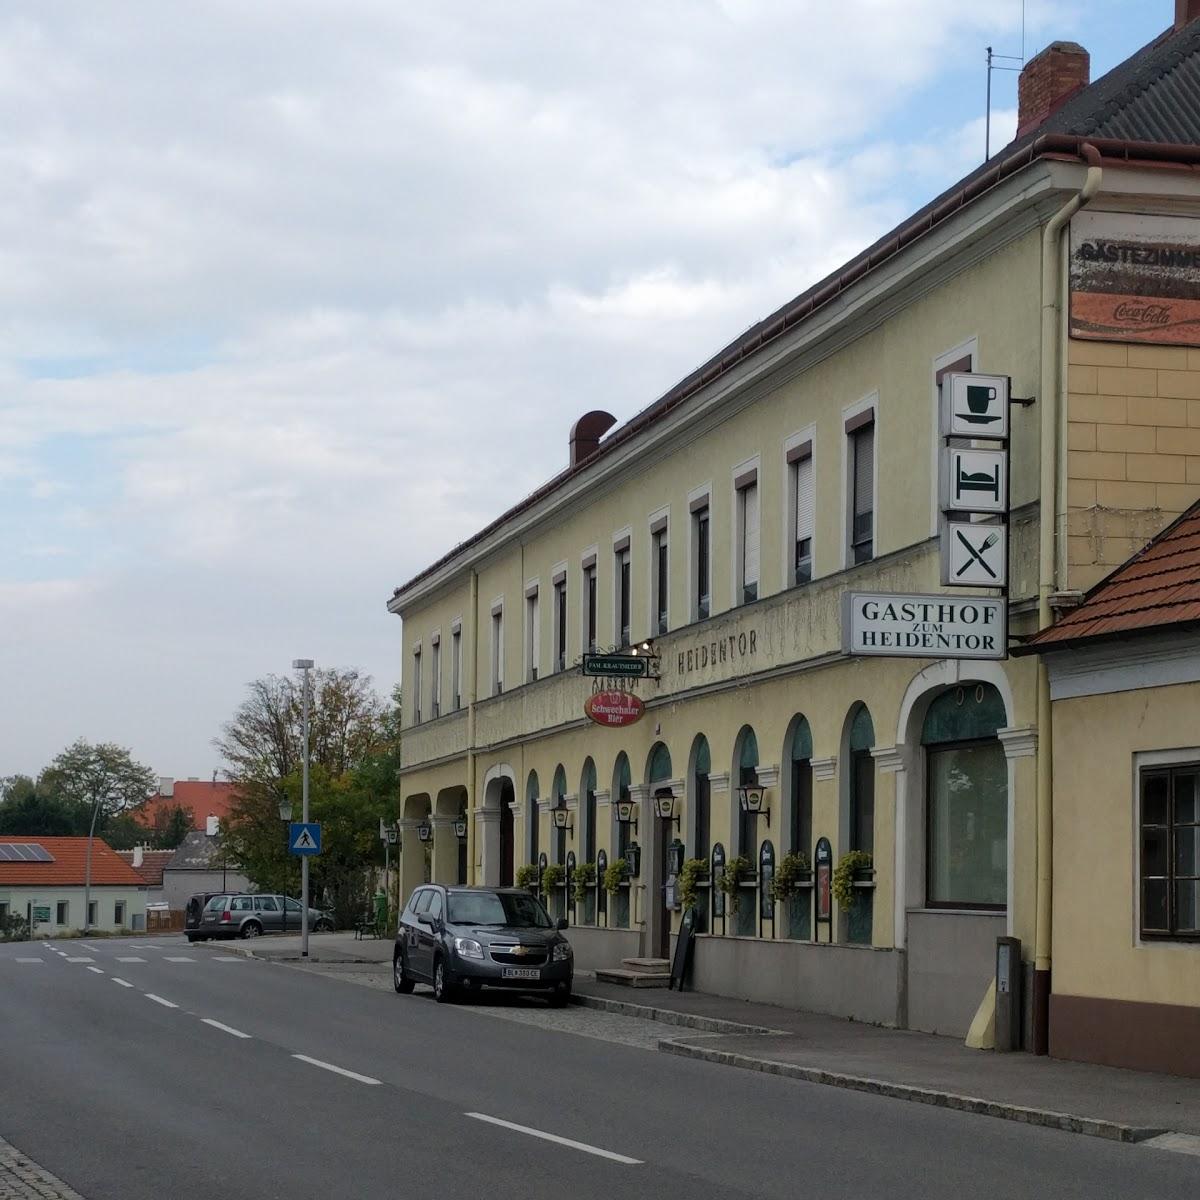 Restaurant "Gästezimmer - Gasthof Heidentor" in Petronell-Carnuntum